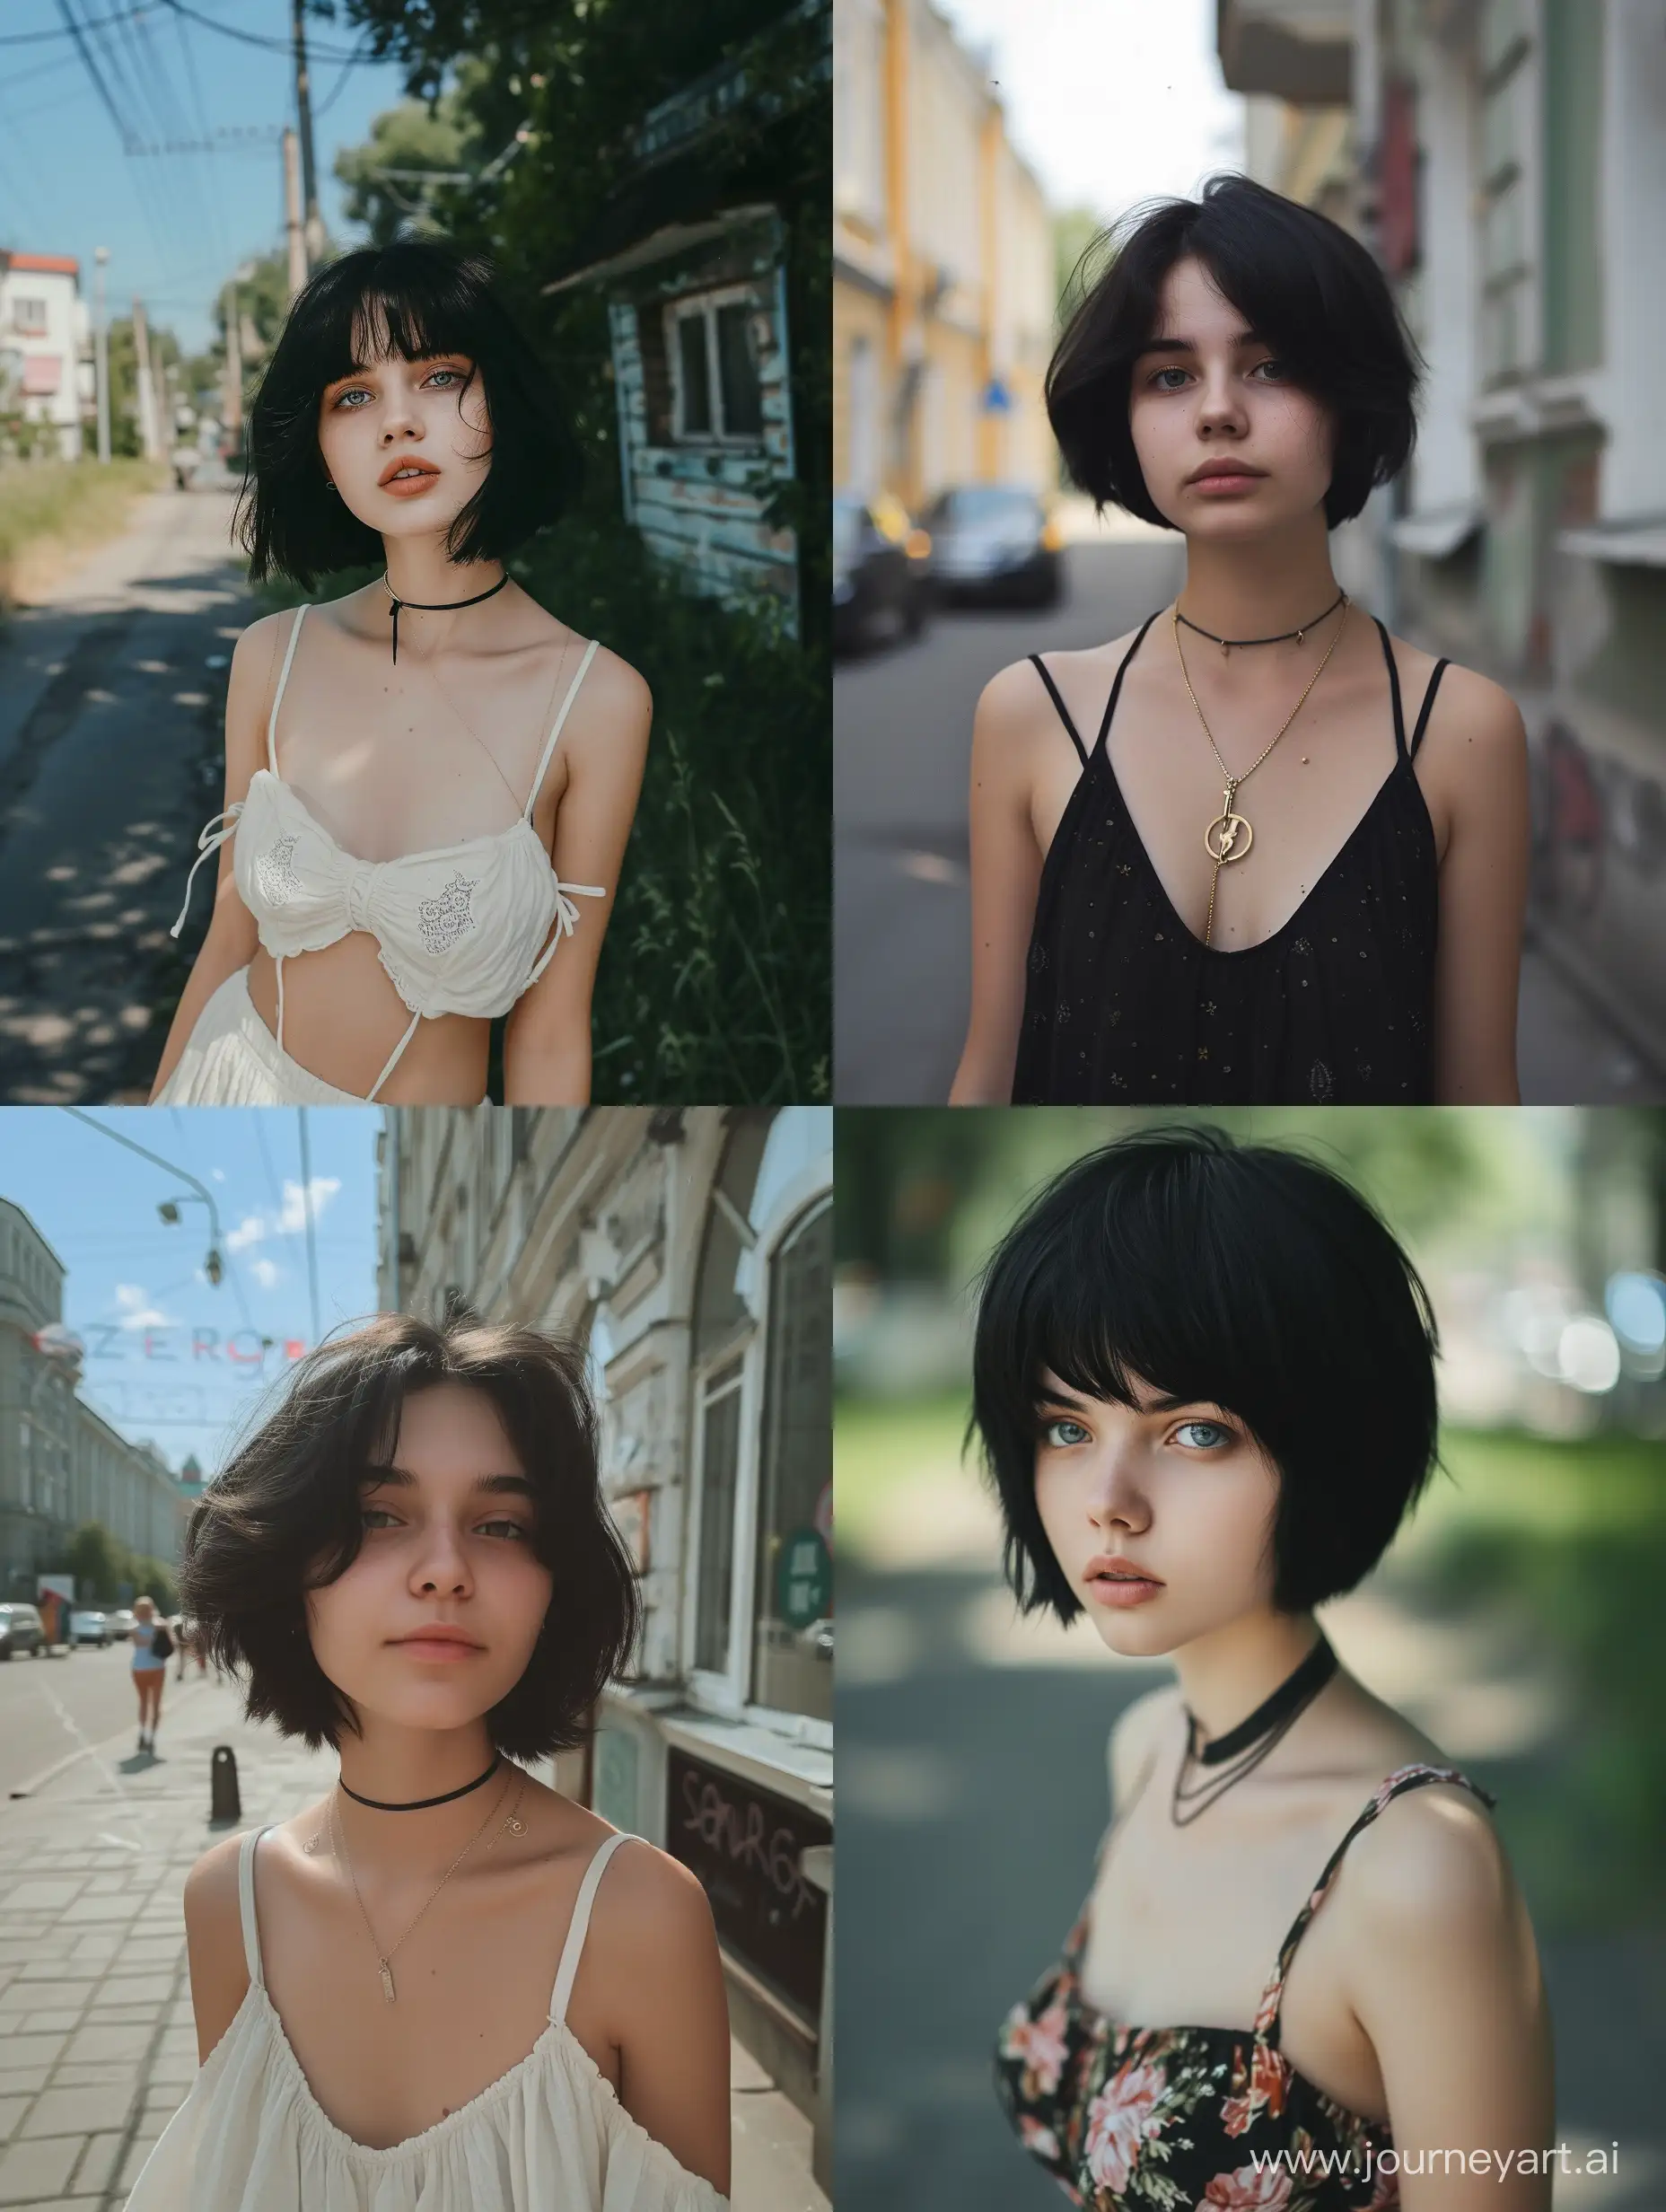 Stylish-Russian-Teen-Girl-with-Black-Short-Hair-in-Urban-Summer-Setting